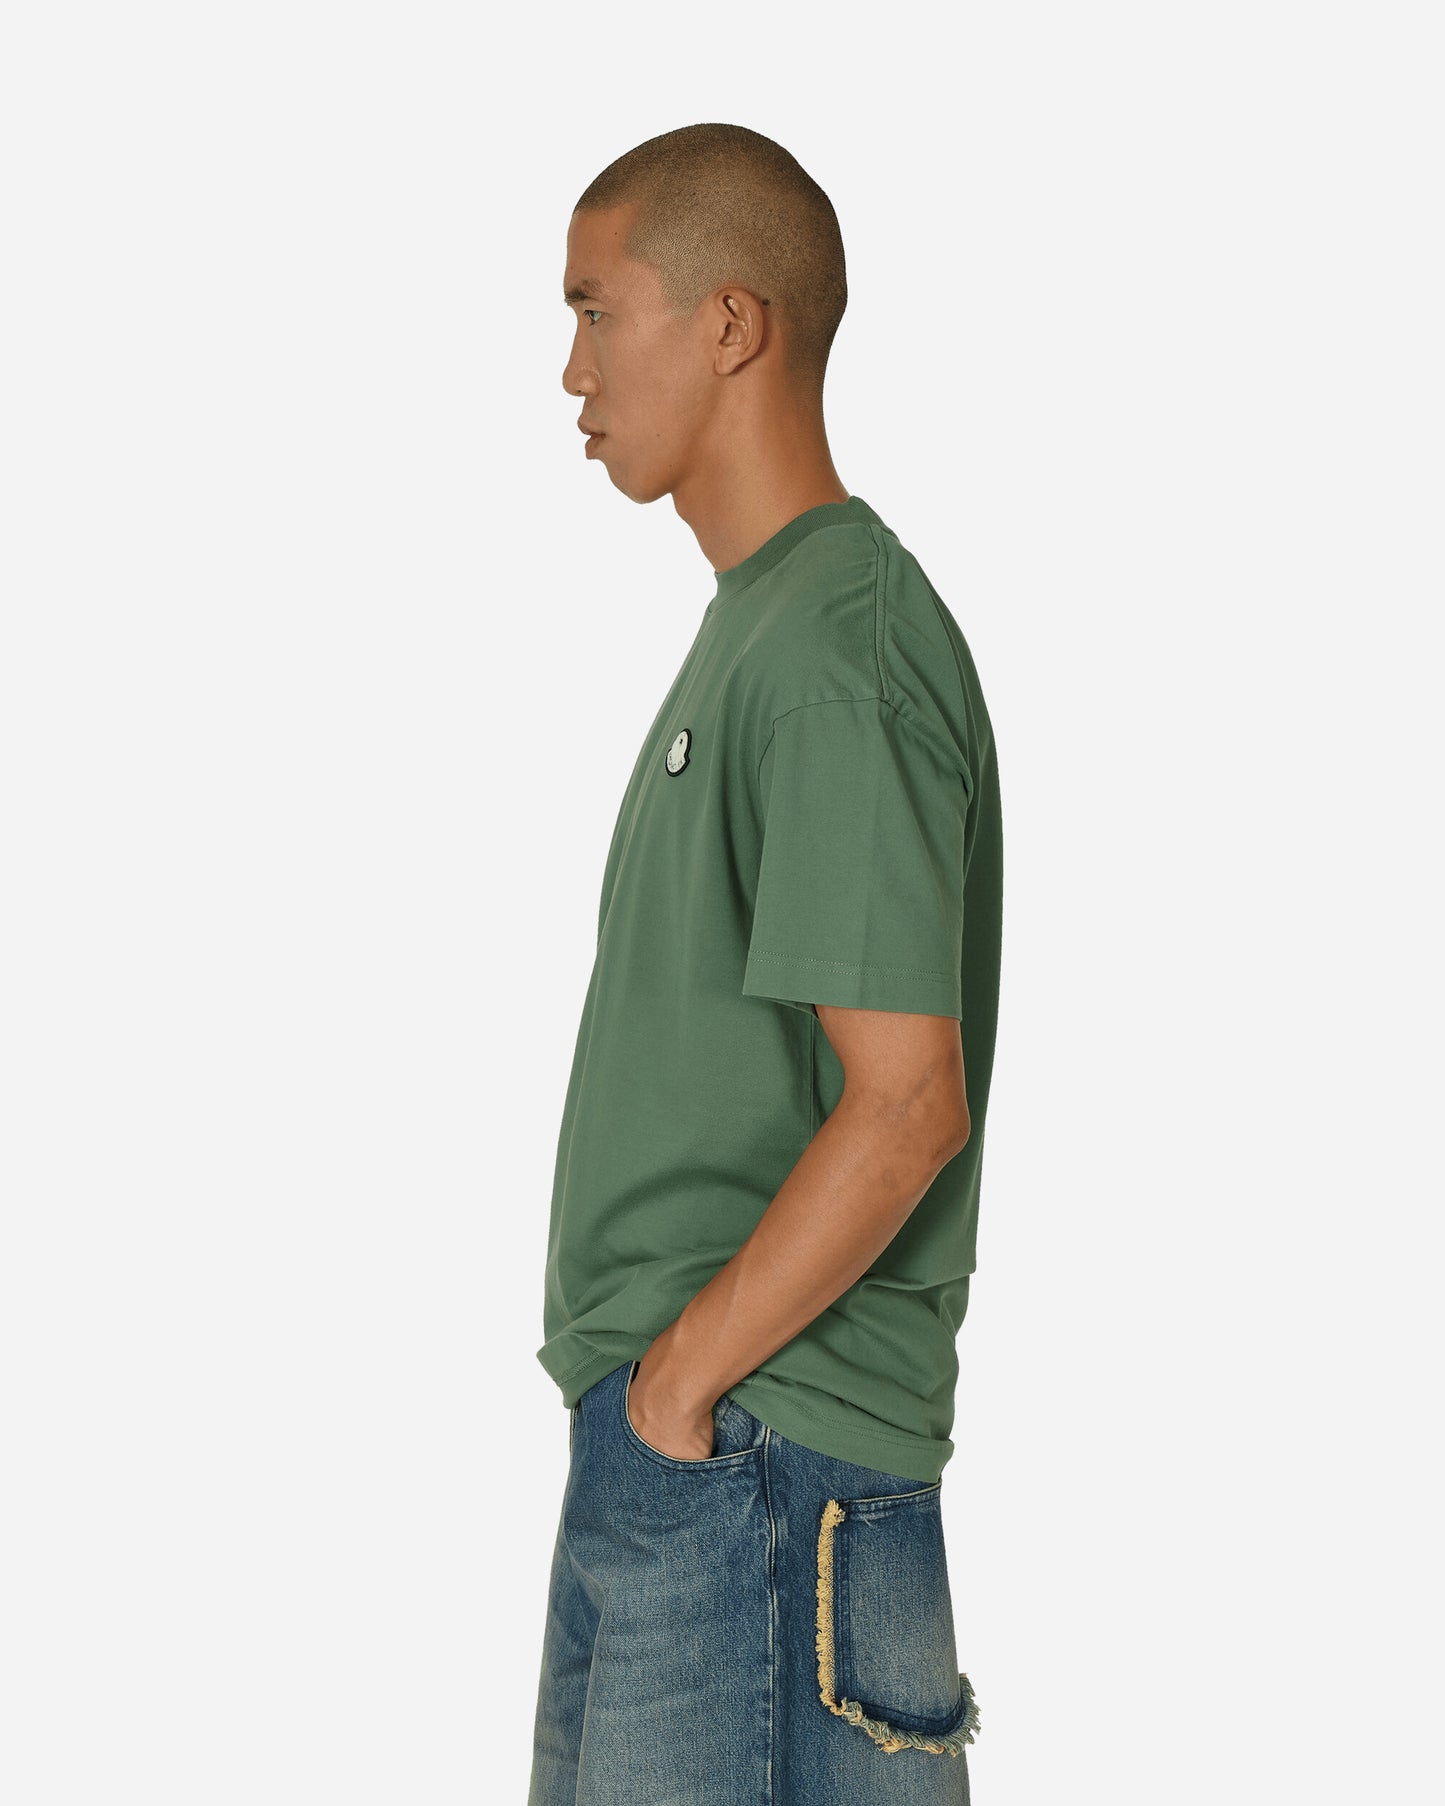 Moncler Genius T-Shirt X Palm Angels Green T-Shirts Shortsleeve 8C00003M3568 855